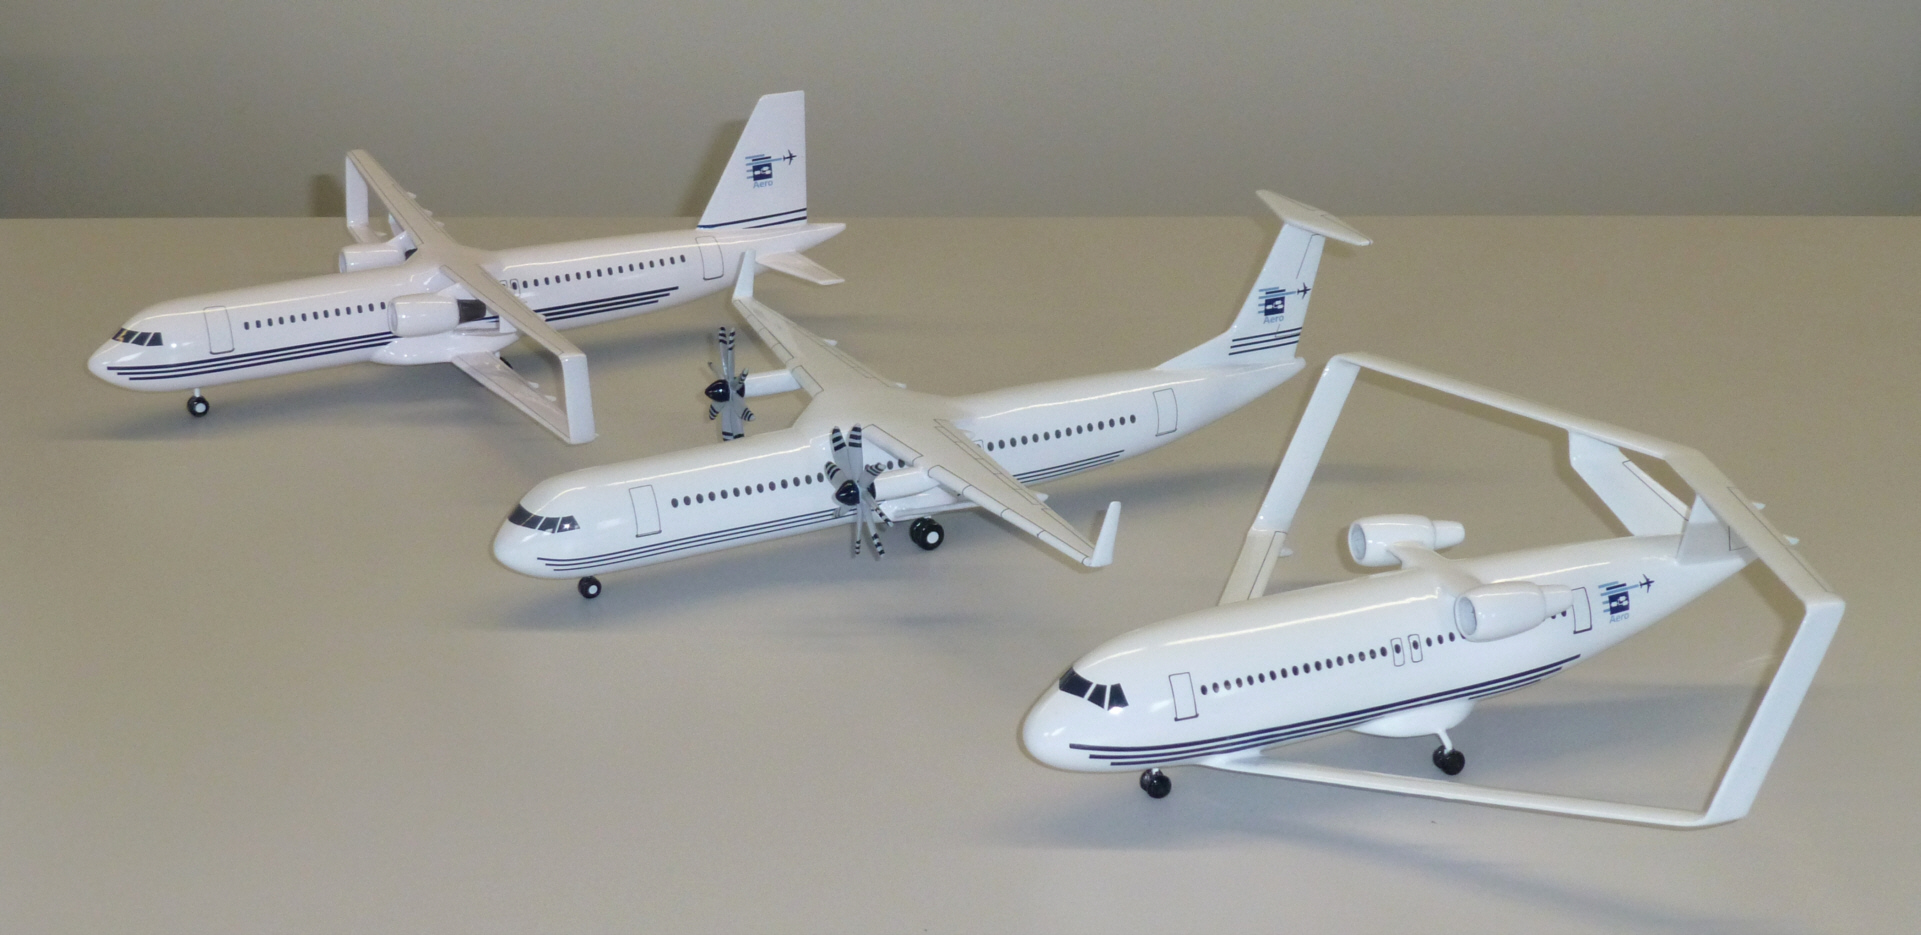 3 Aircraft Models